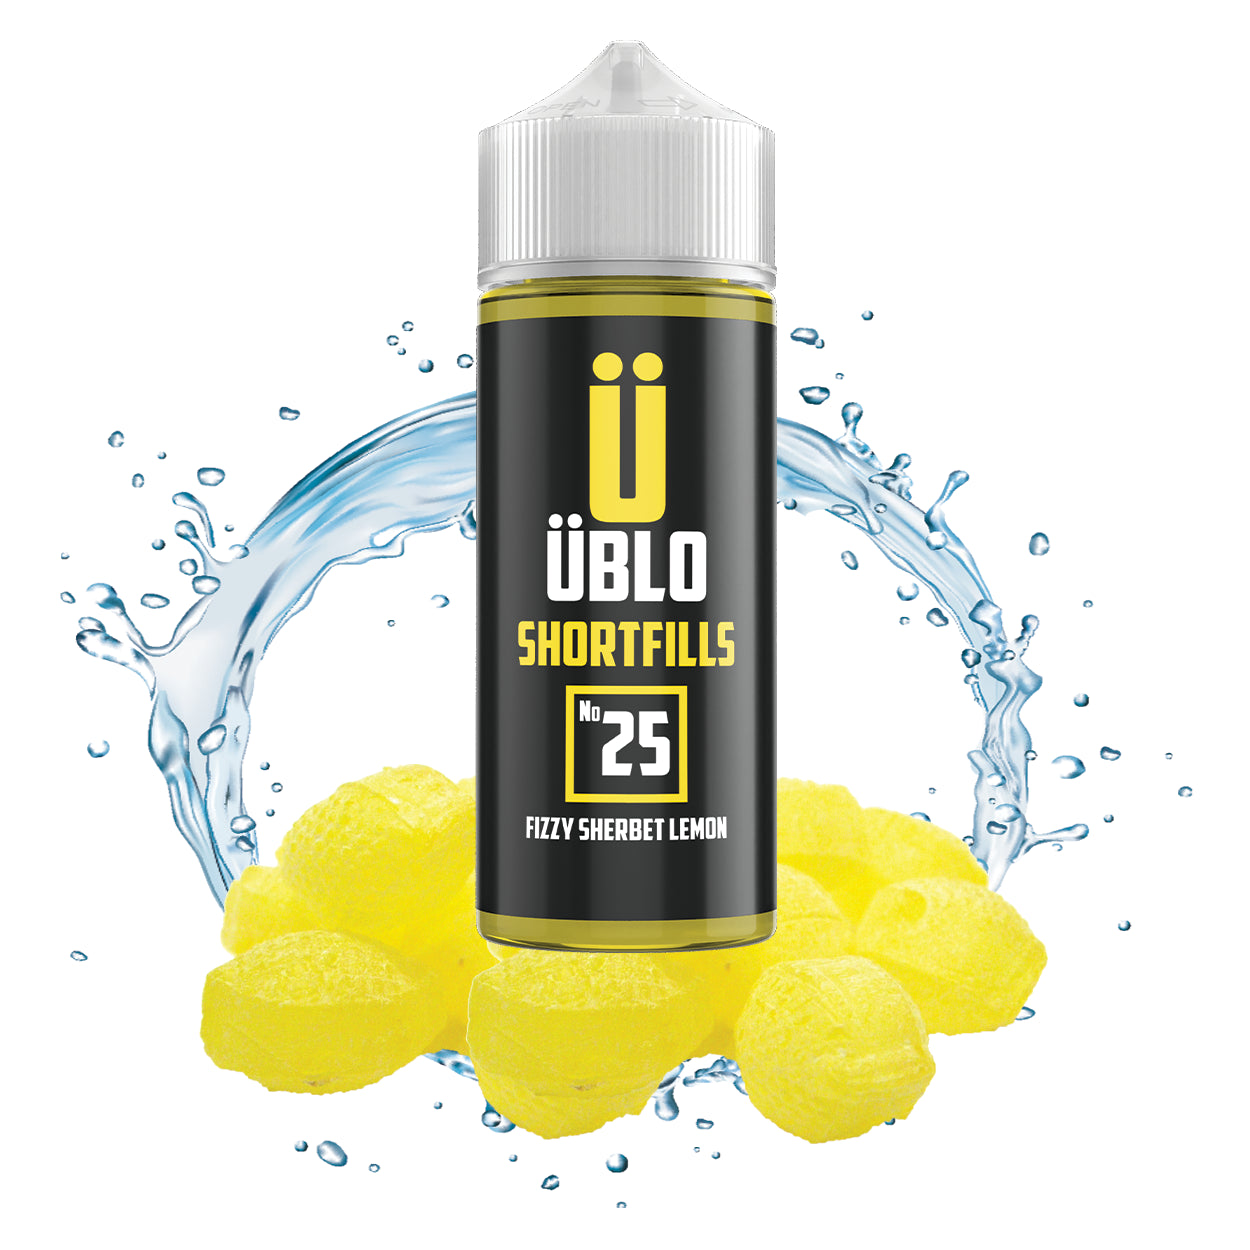 Shortfill E-liquid – No25 Fizzy Sherbert Lemon 120ML